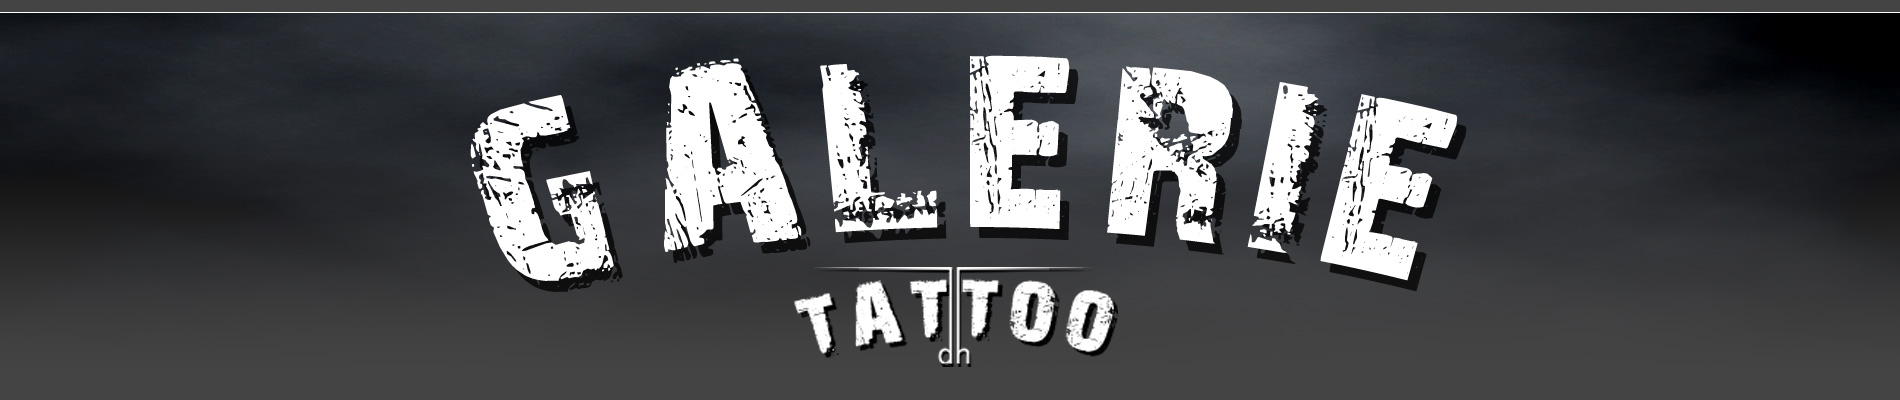 galerie dh tattoo